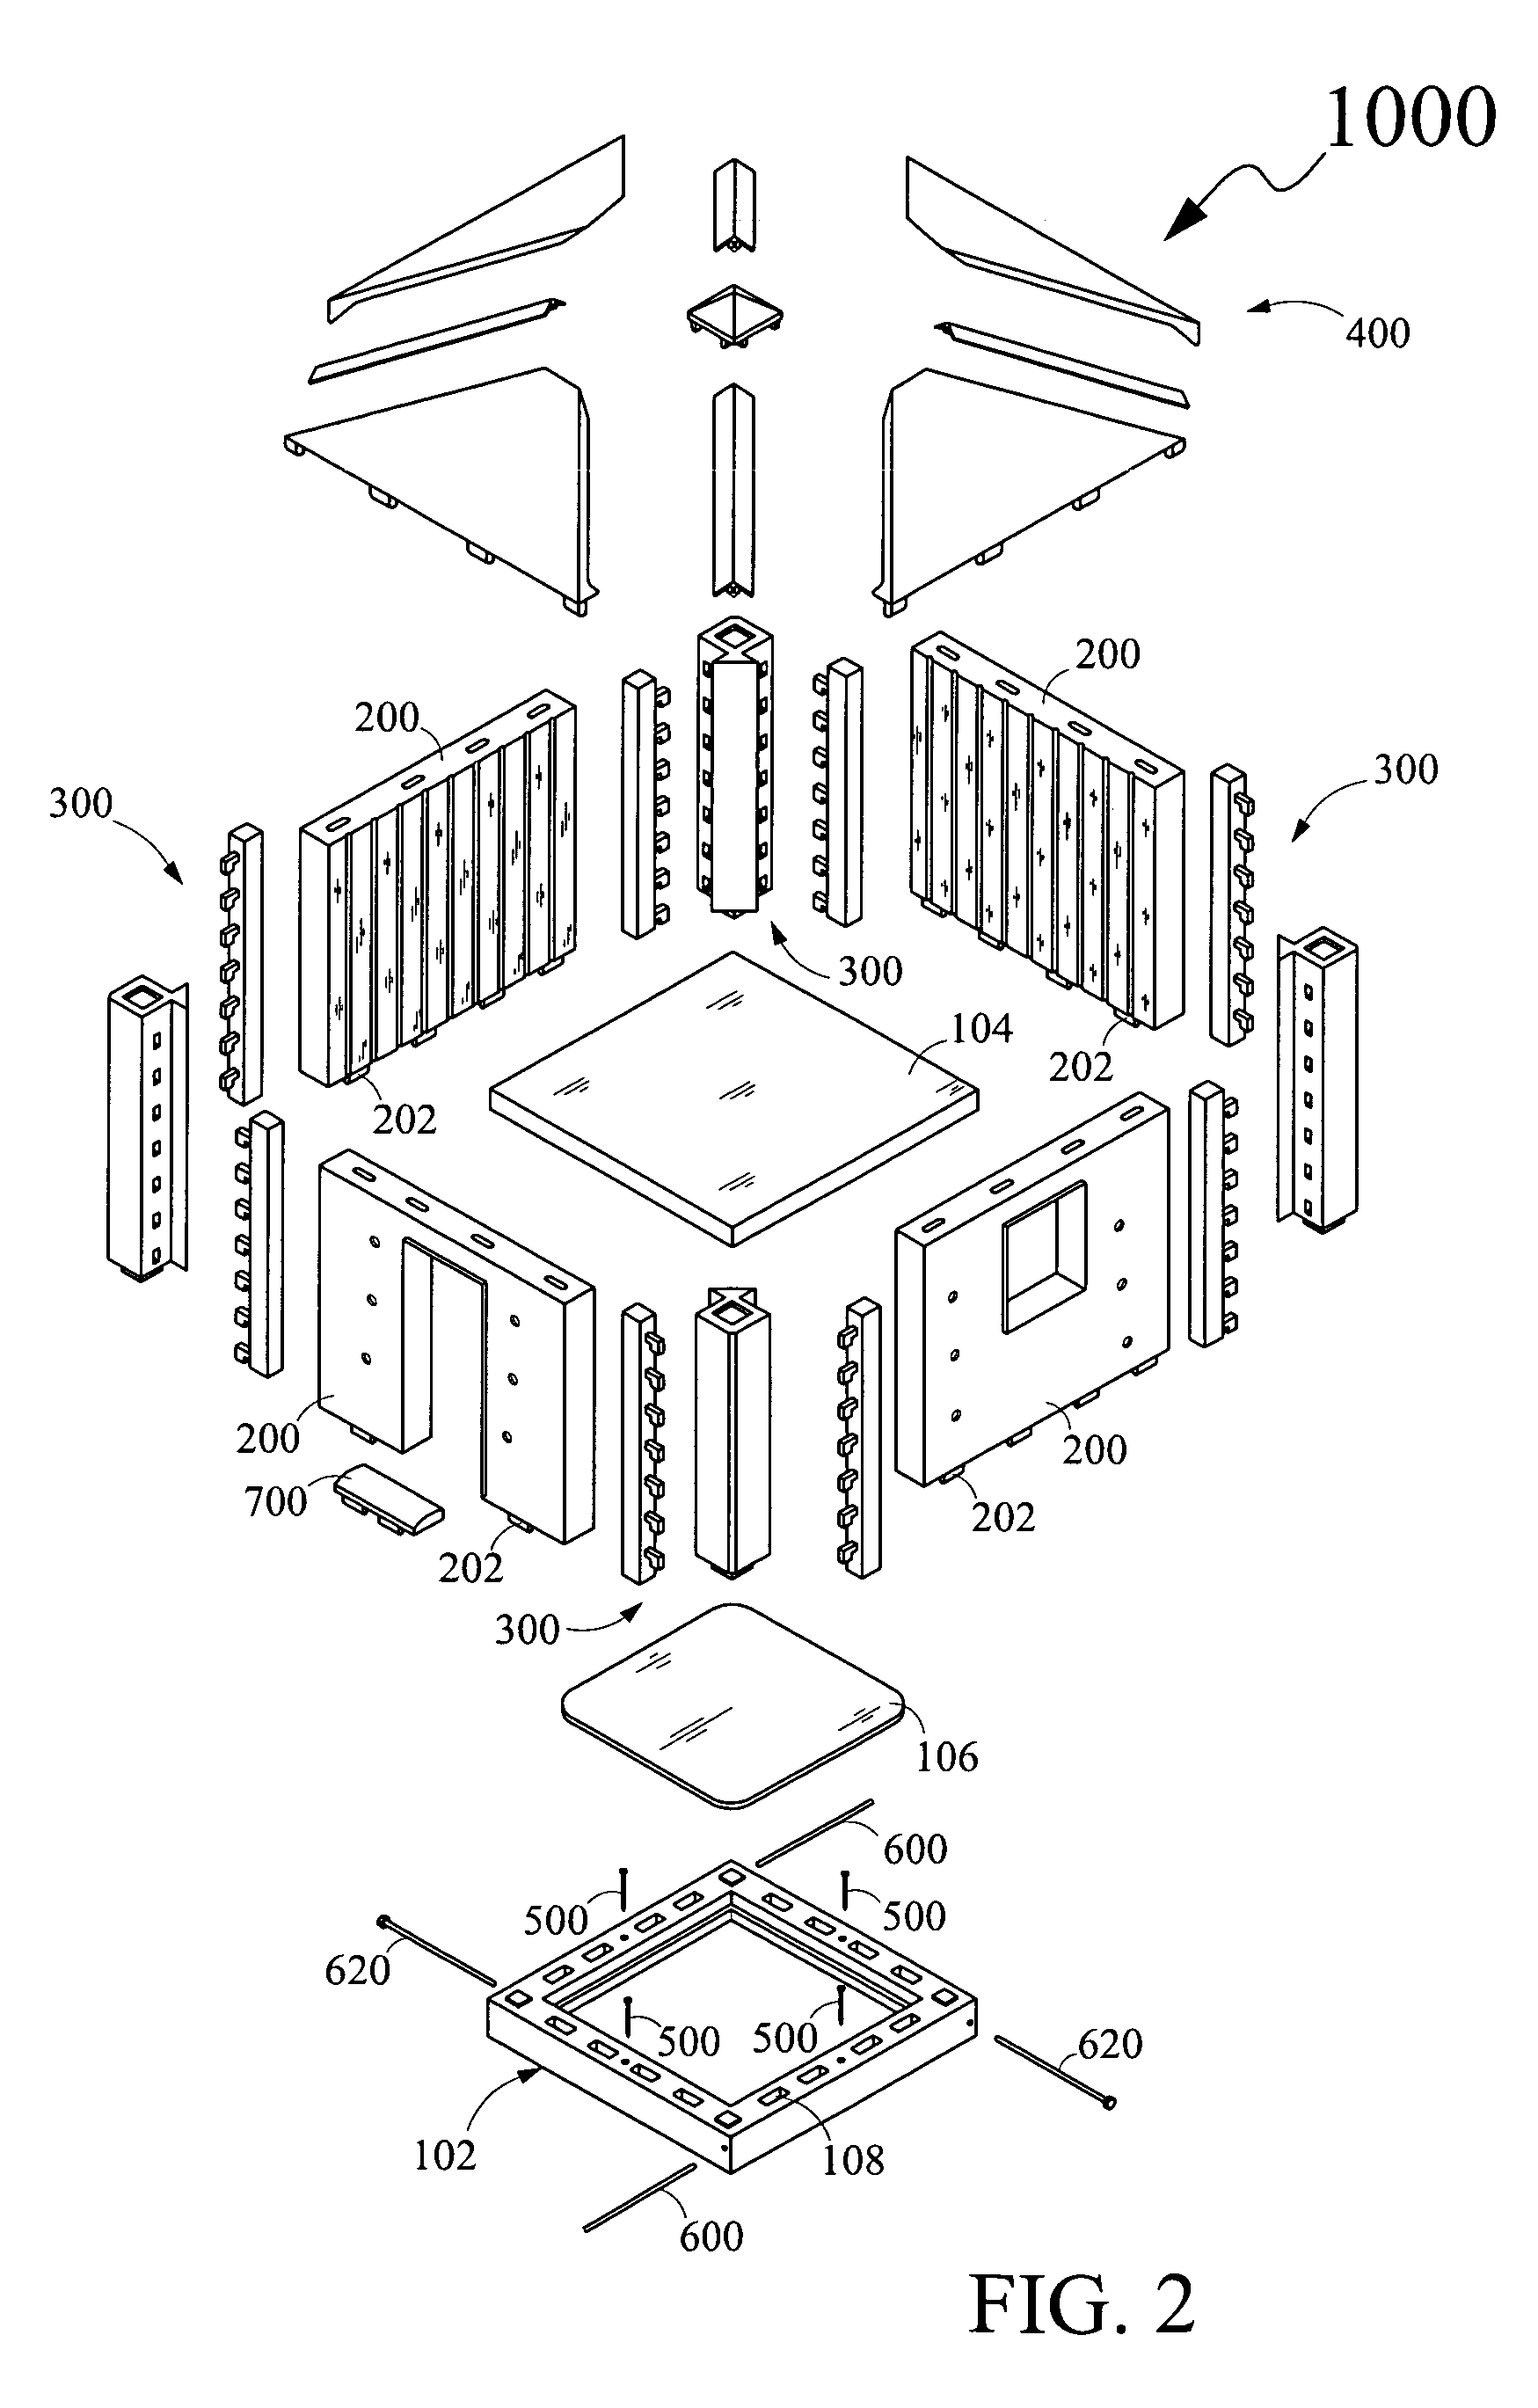 Modular building system